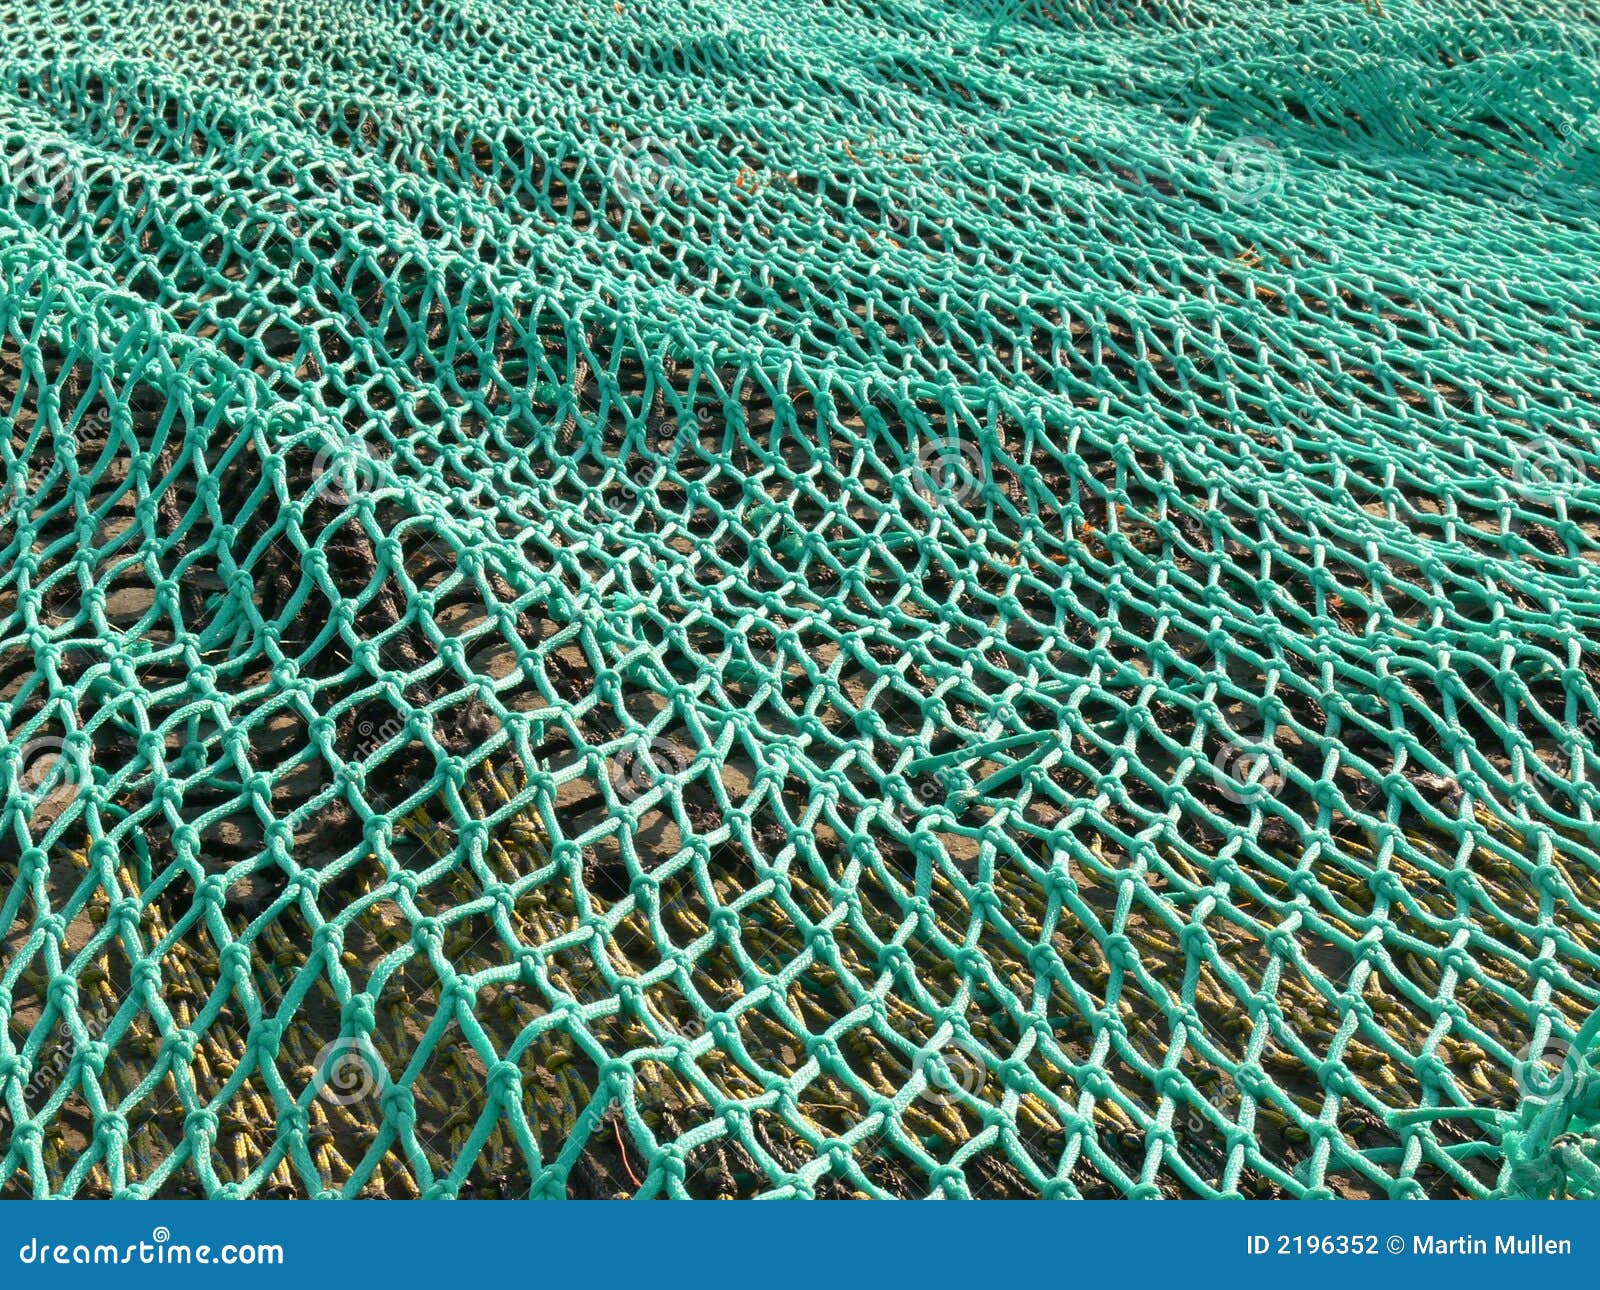 8,675 Green Fishing Net Stock Photos - Free & Royalty-Free Stock